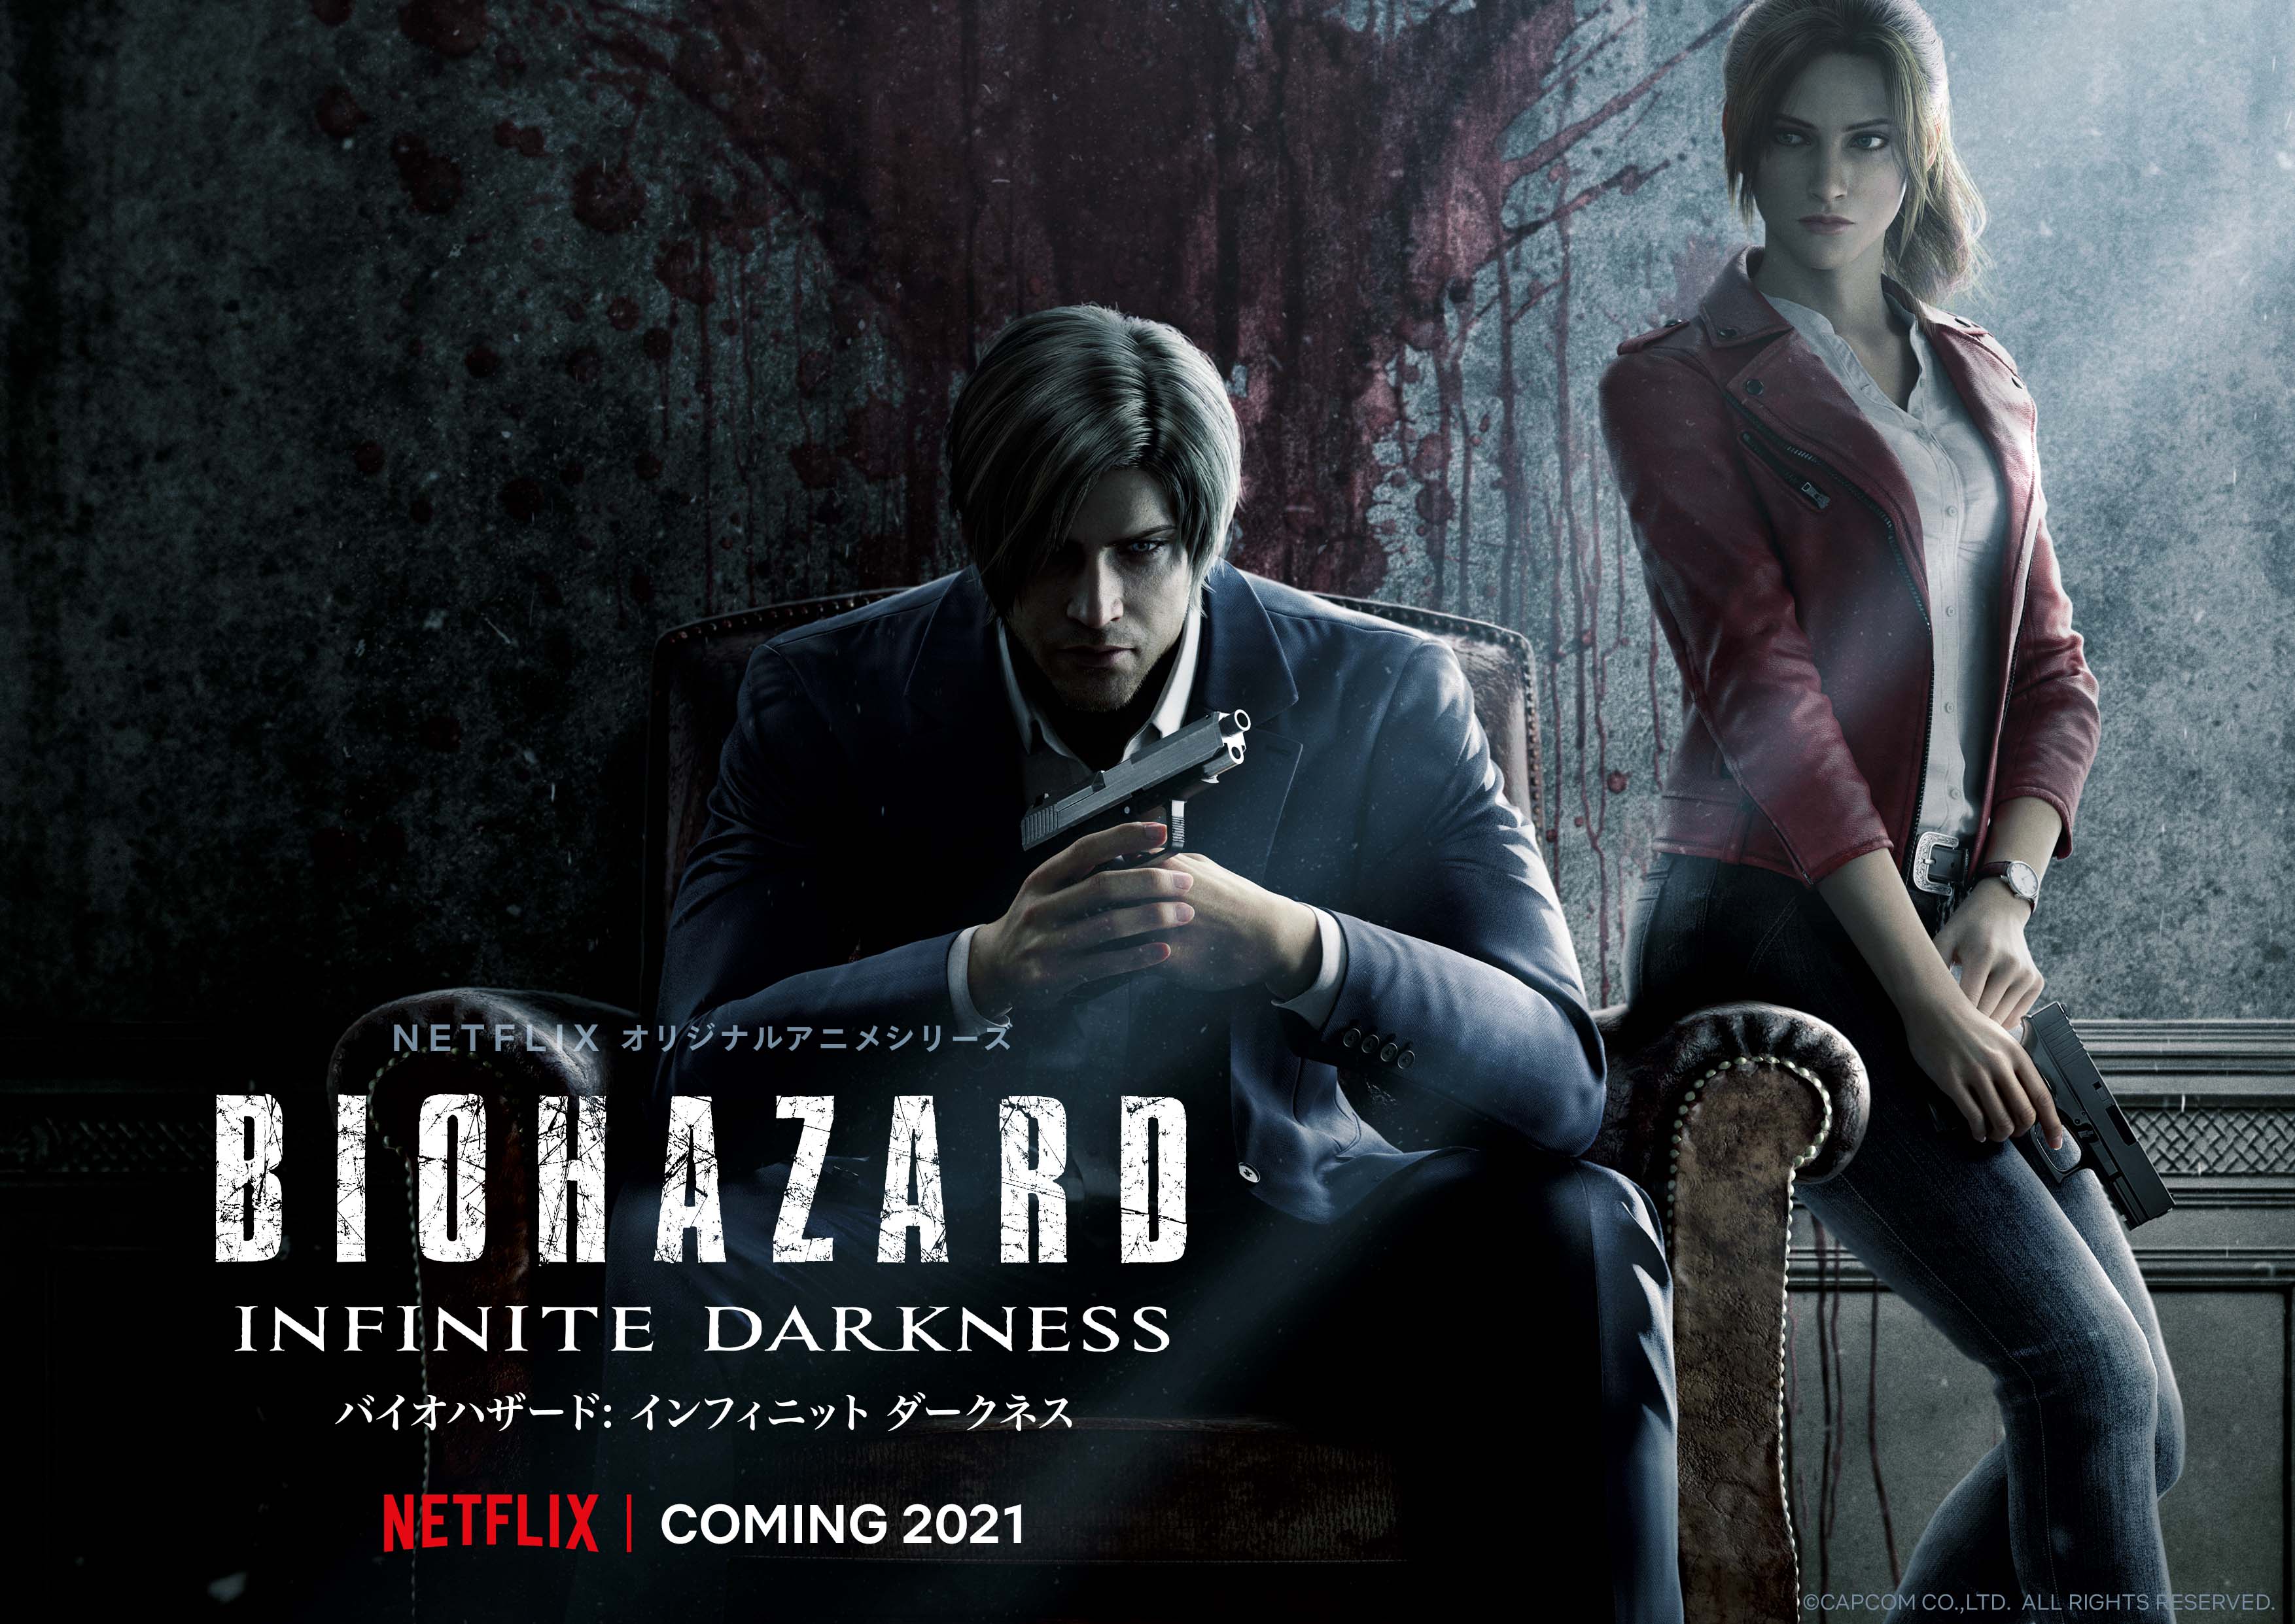 Resident Evil on Netflix TV series: Release date, cast, trailer